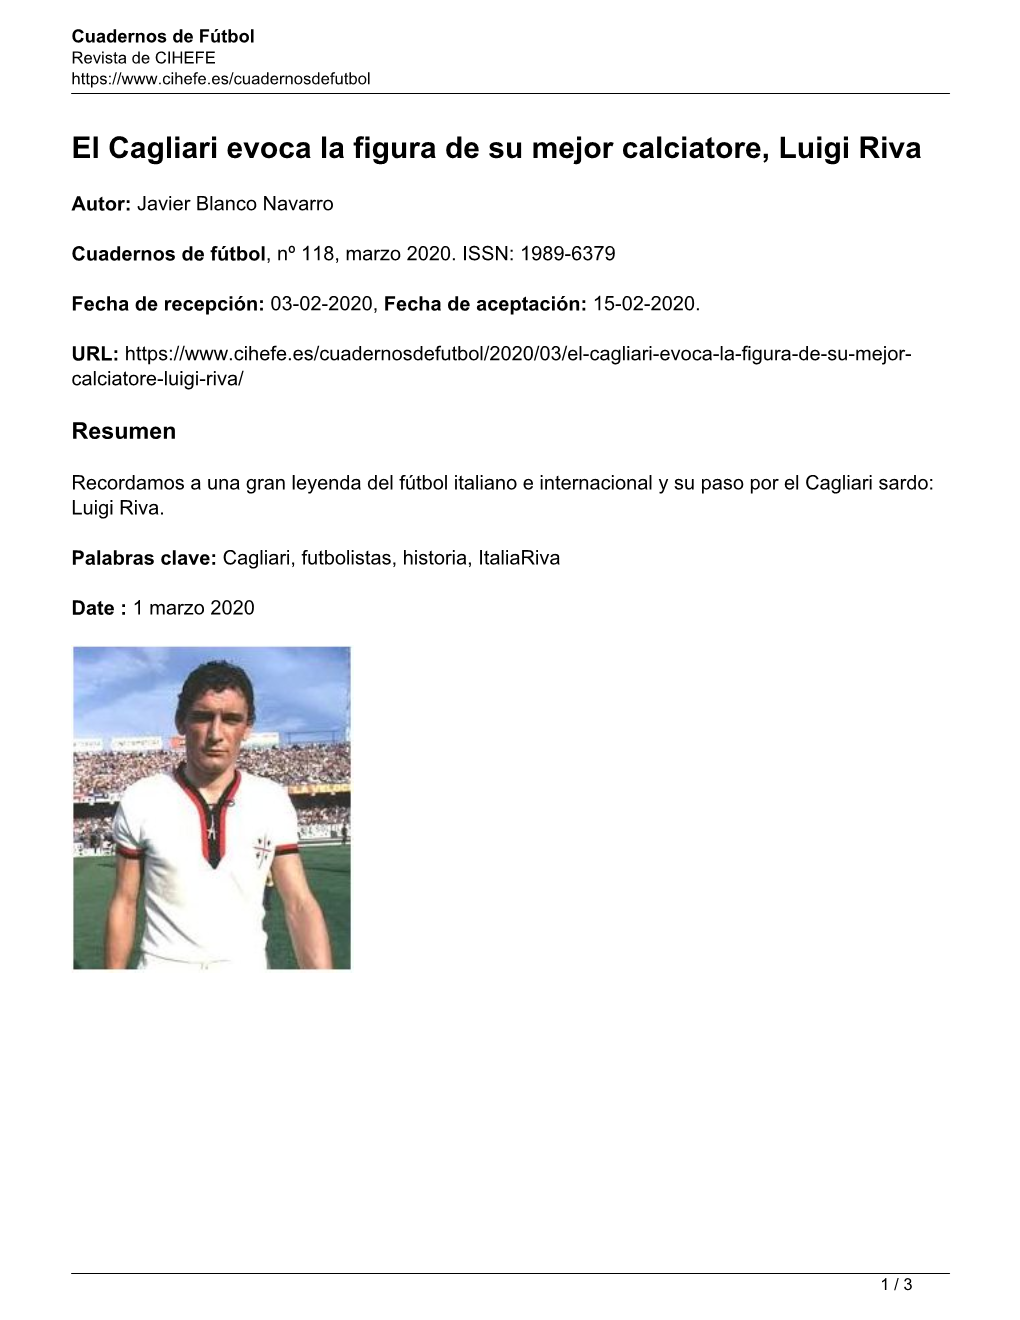 El Cagliari Evoca La Figura De Su Mejor Calciatore, Luigi Riva